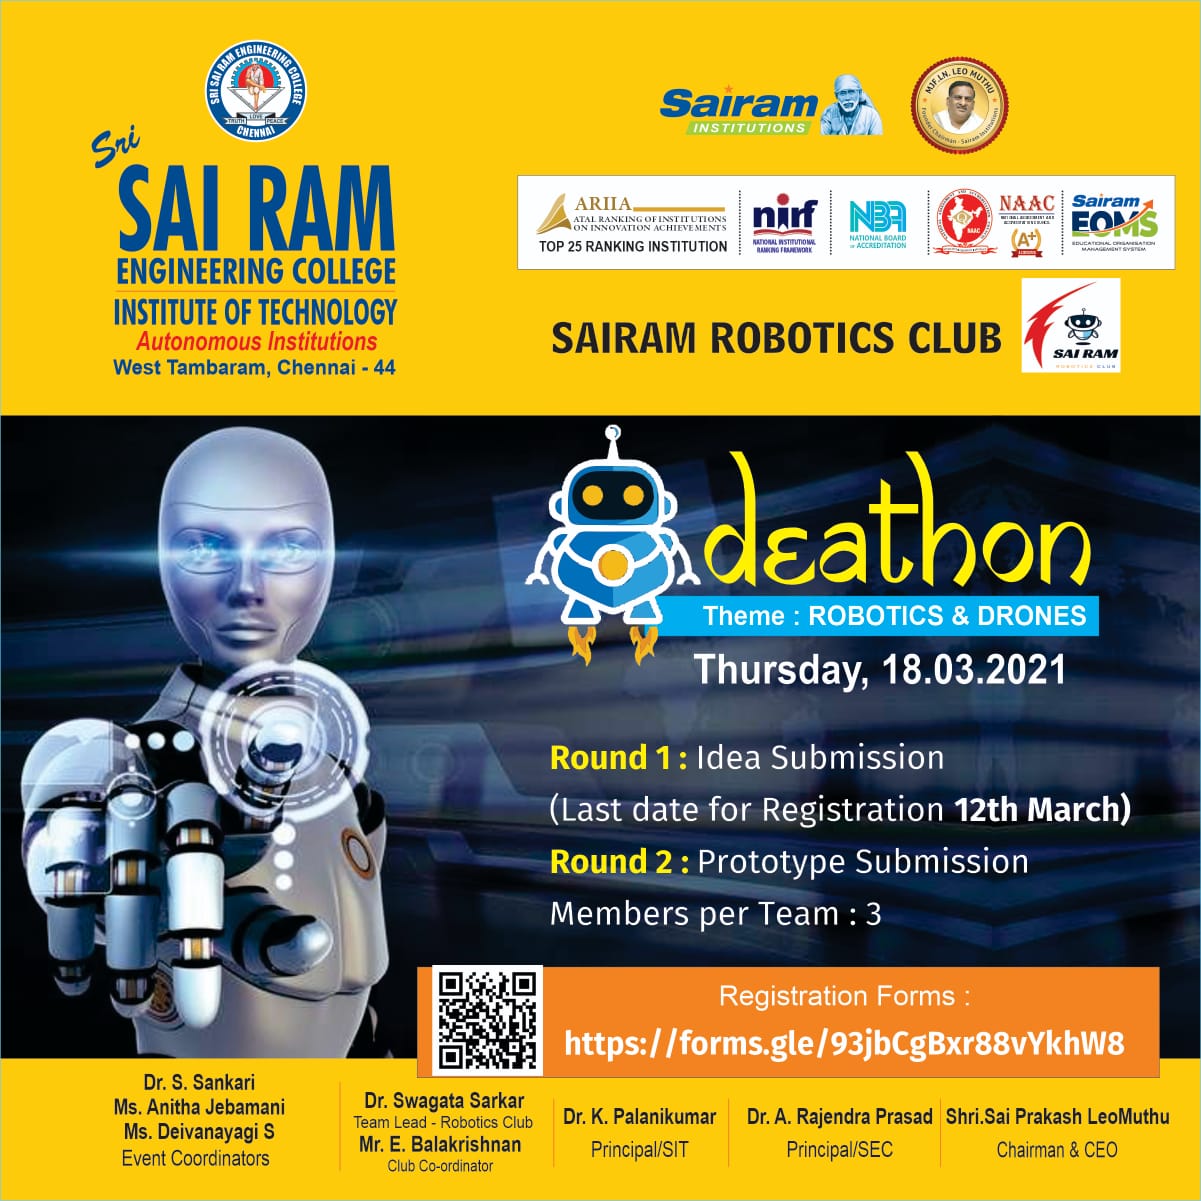 Sairam Robotics Club is set to organize  ” IDEATHON ”  on the Theme of   “ROBOTICS & DRONES ” on 18 March 2021